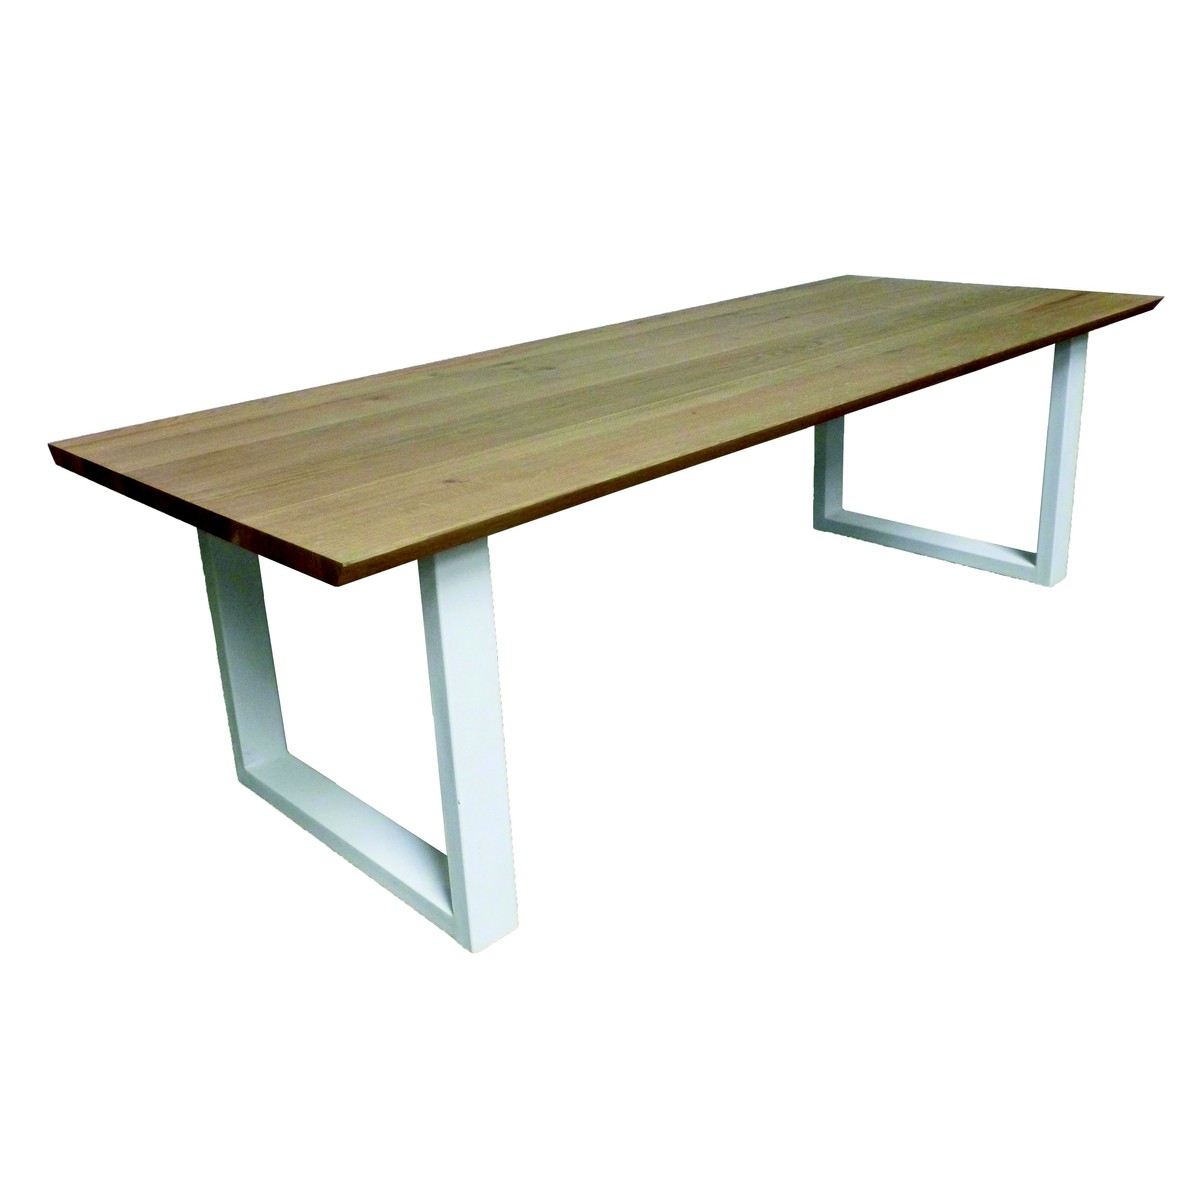   Table basse Retro Seven rectangulaire  130x70x40cm